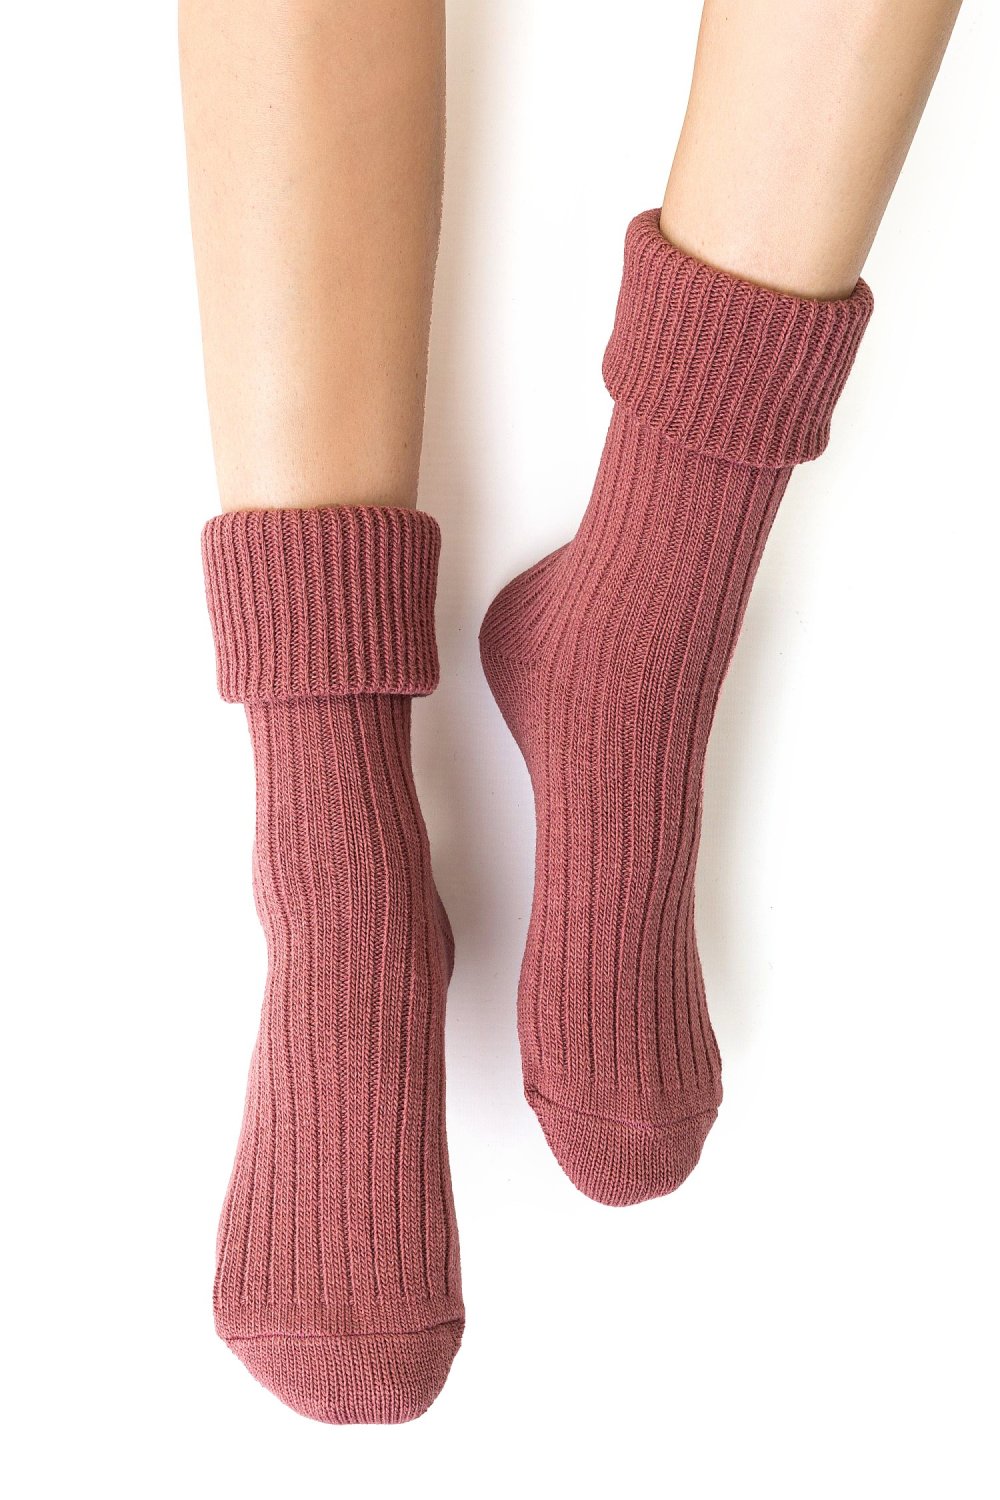 E-shop Dámske ponožky 067 dark pink